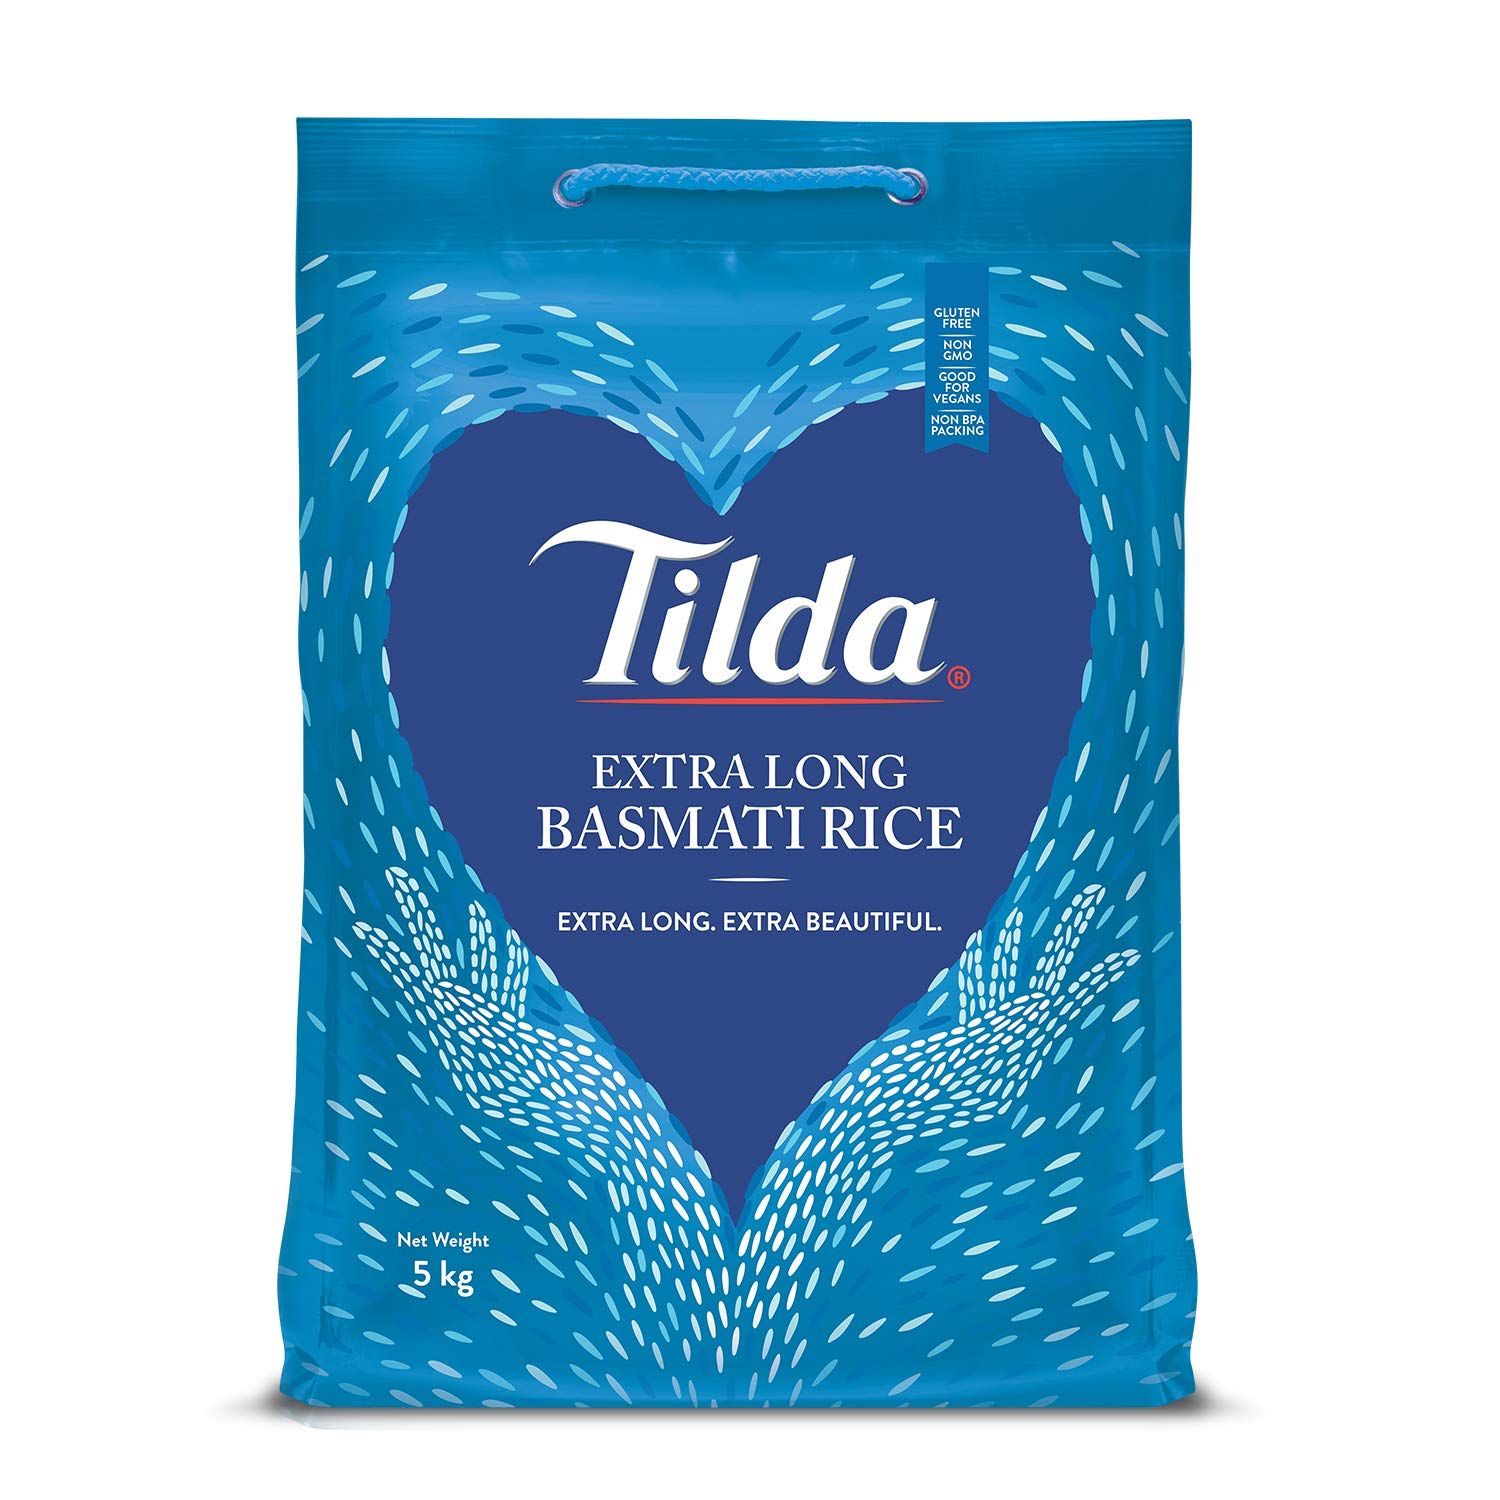 Tilda Extra Long Basmati Rice Image